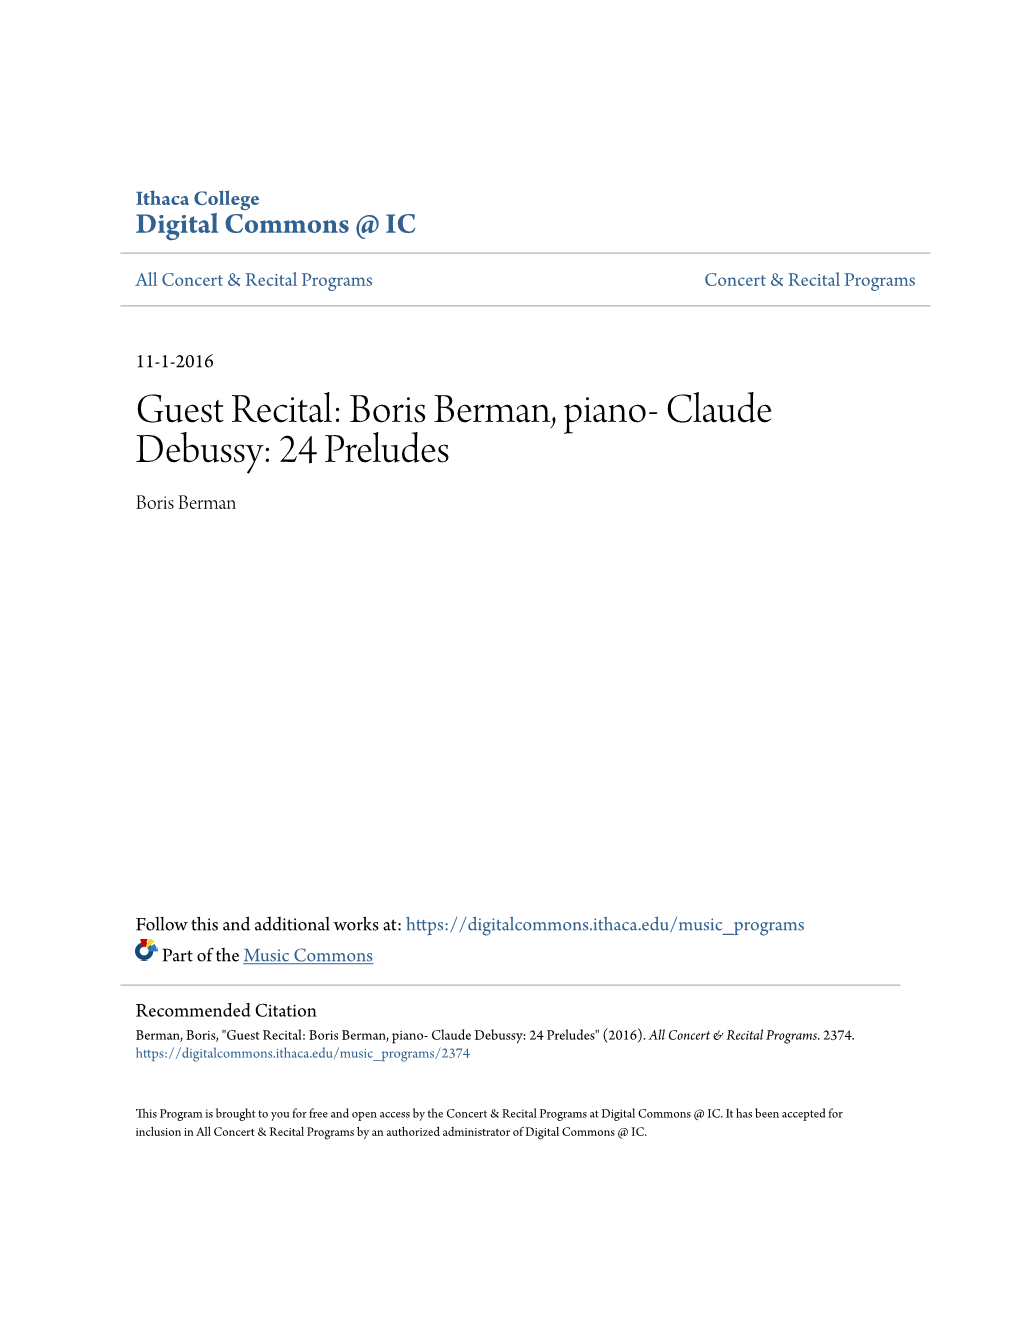 Guest Recital: Boris Berman, Piano- Claude Debussy: 24 Preludes Boris Berman